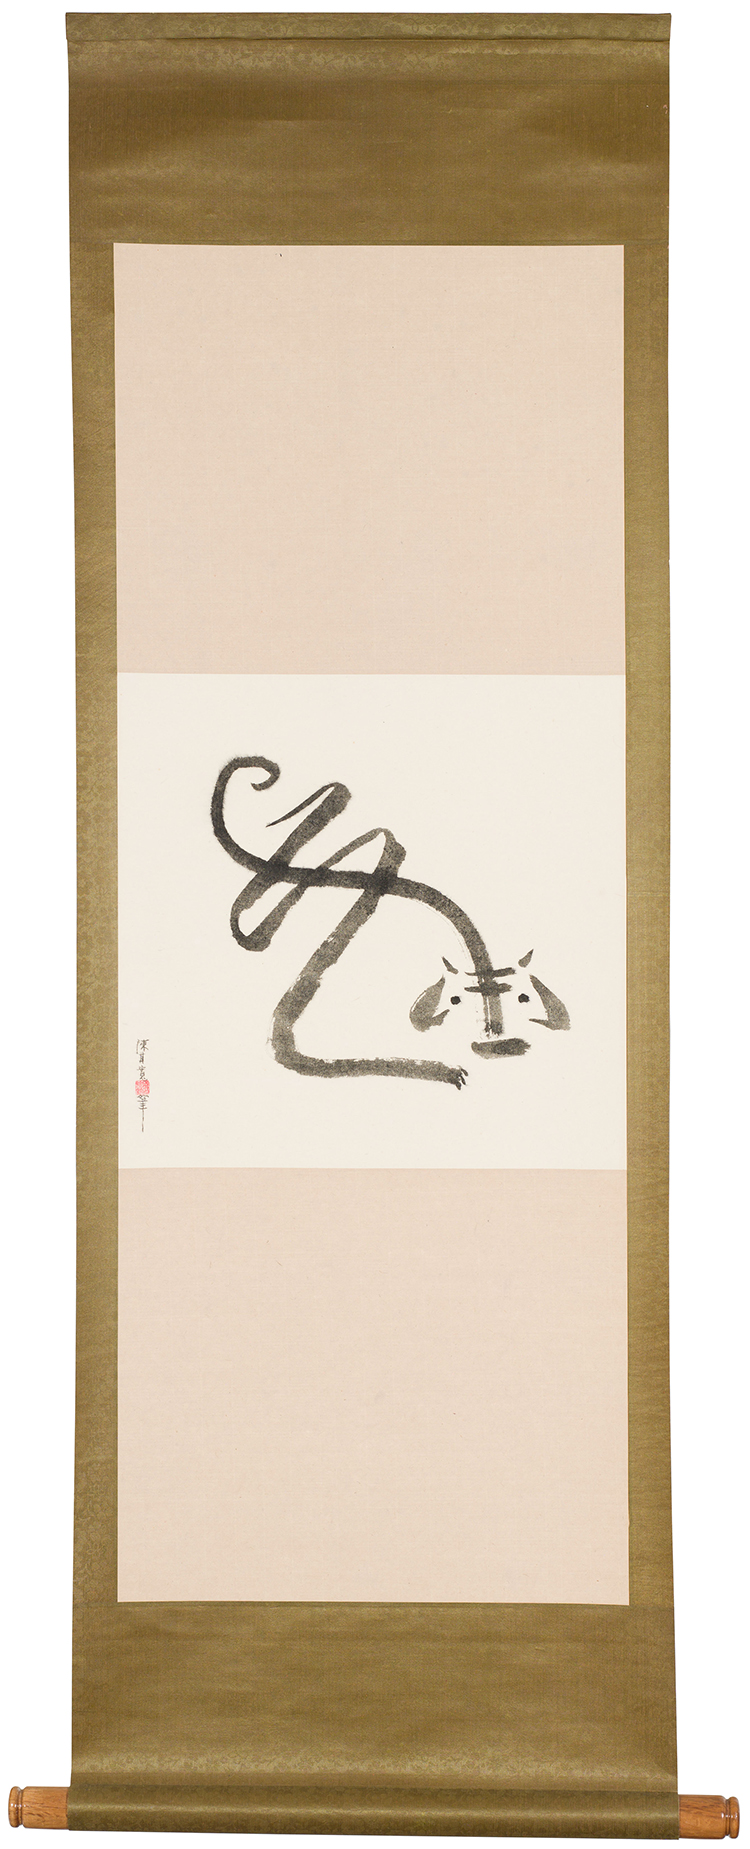 Tiger Calligraphy by Chen Qikuan (Chen Chi Kwan)